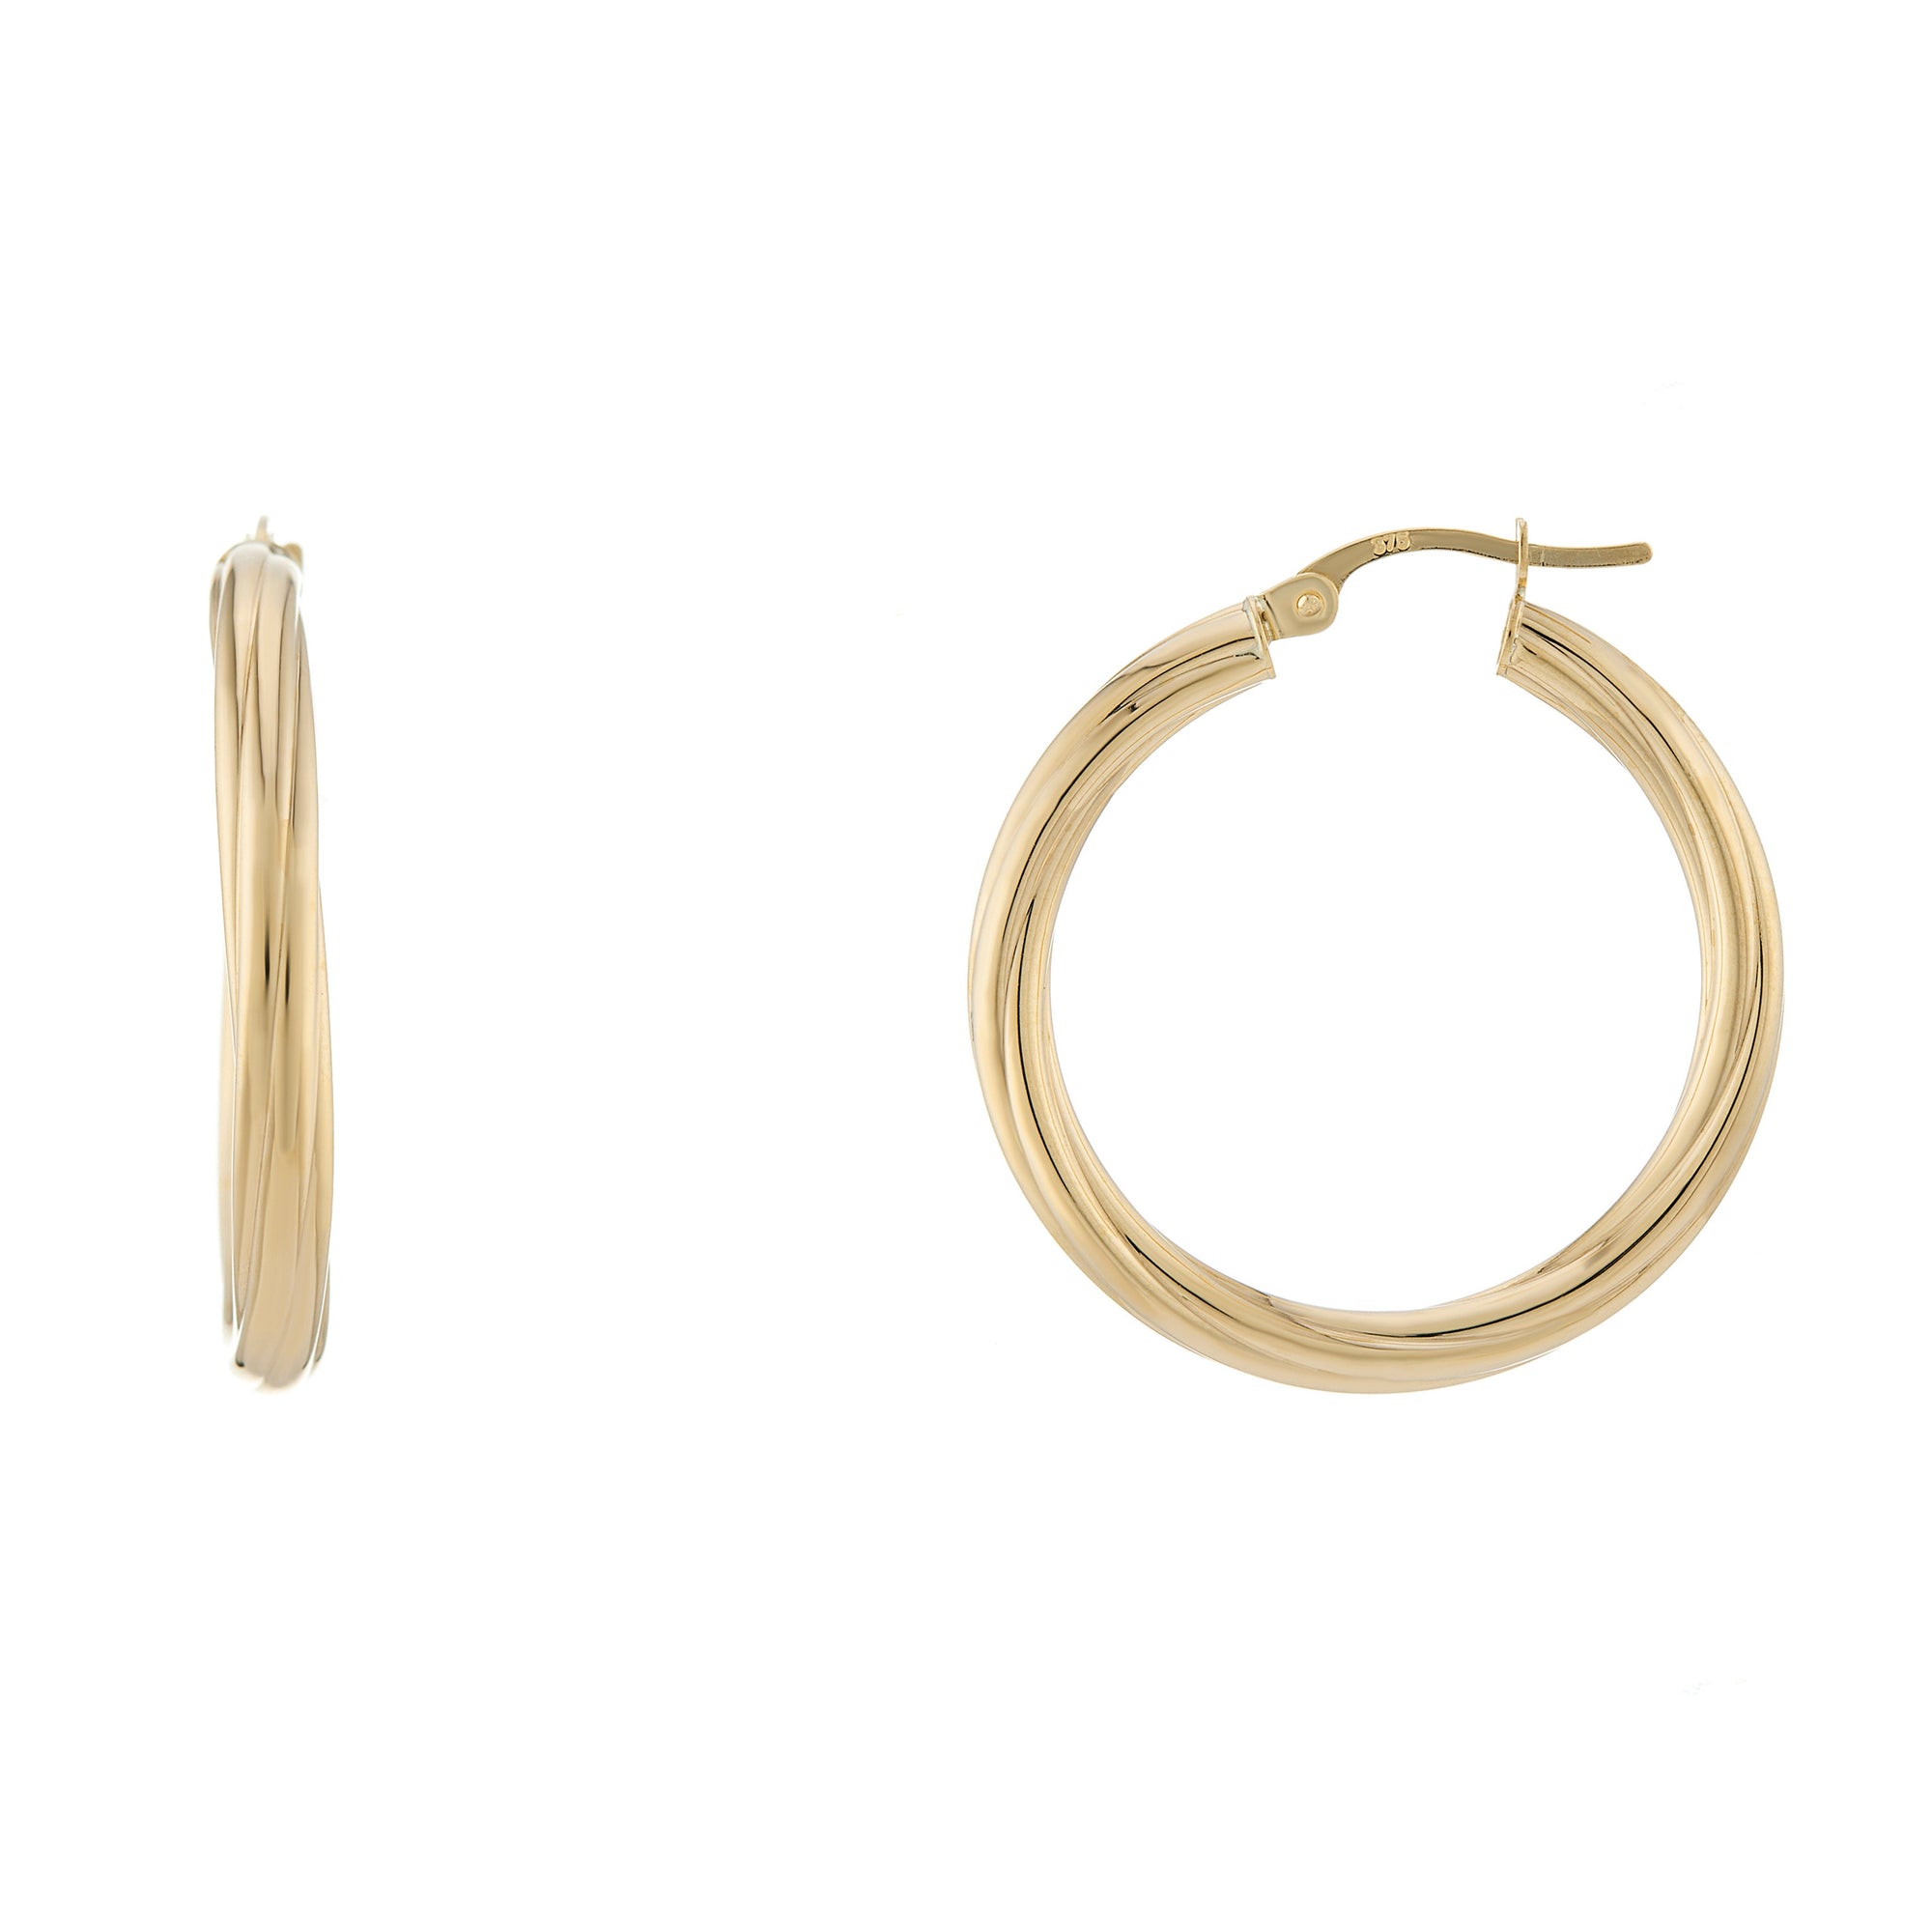 9ct gold 3mm x 20mm twisted hoop earrings